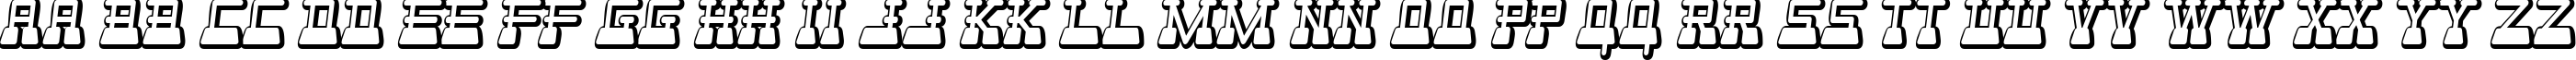 Пример написания английского алфавита шрифтом Webster World